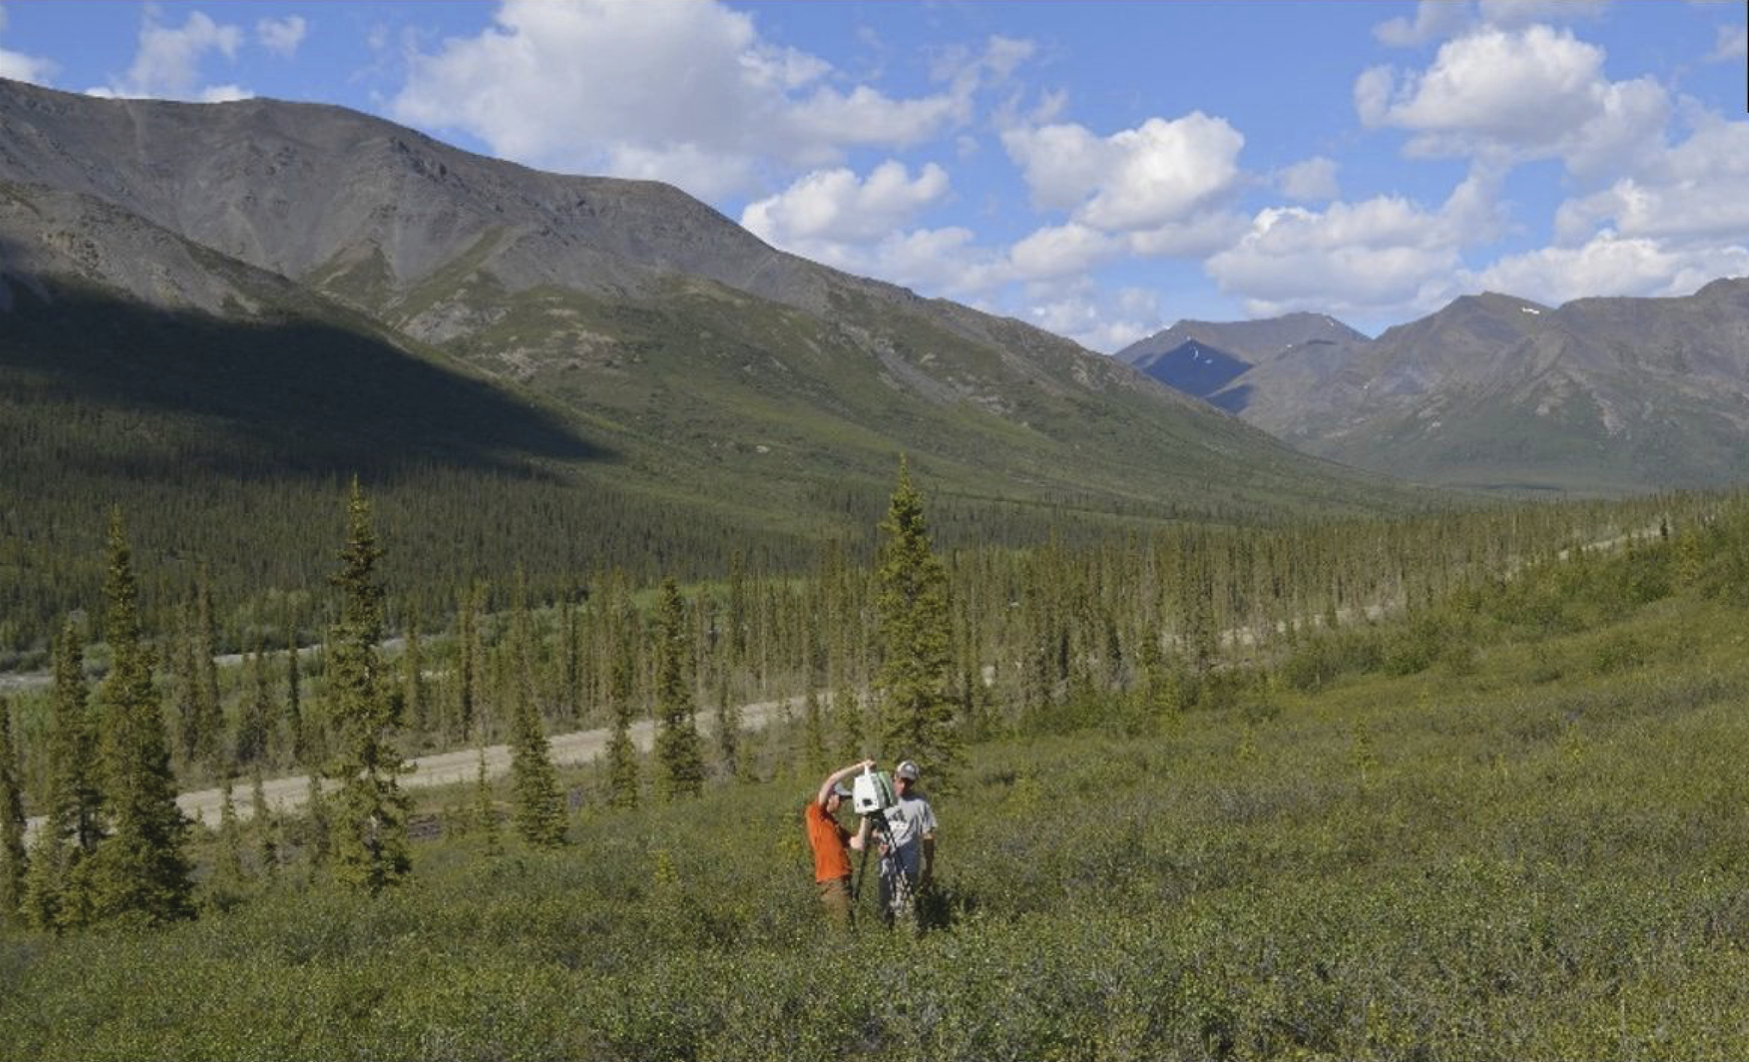 Study plot at the forest-tundra ecotone.